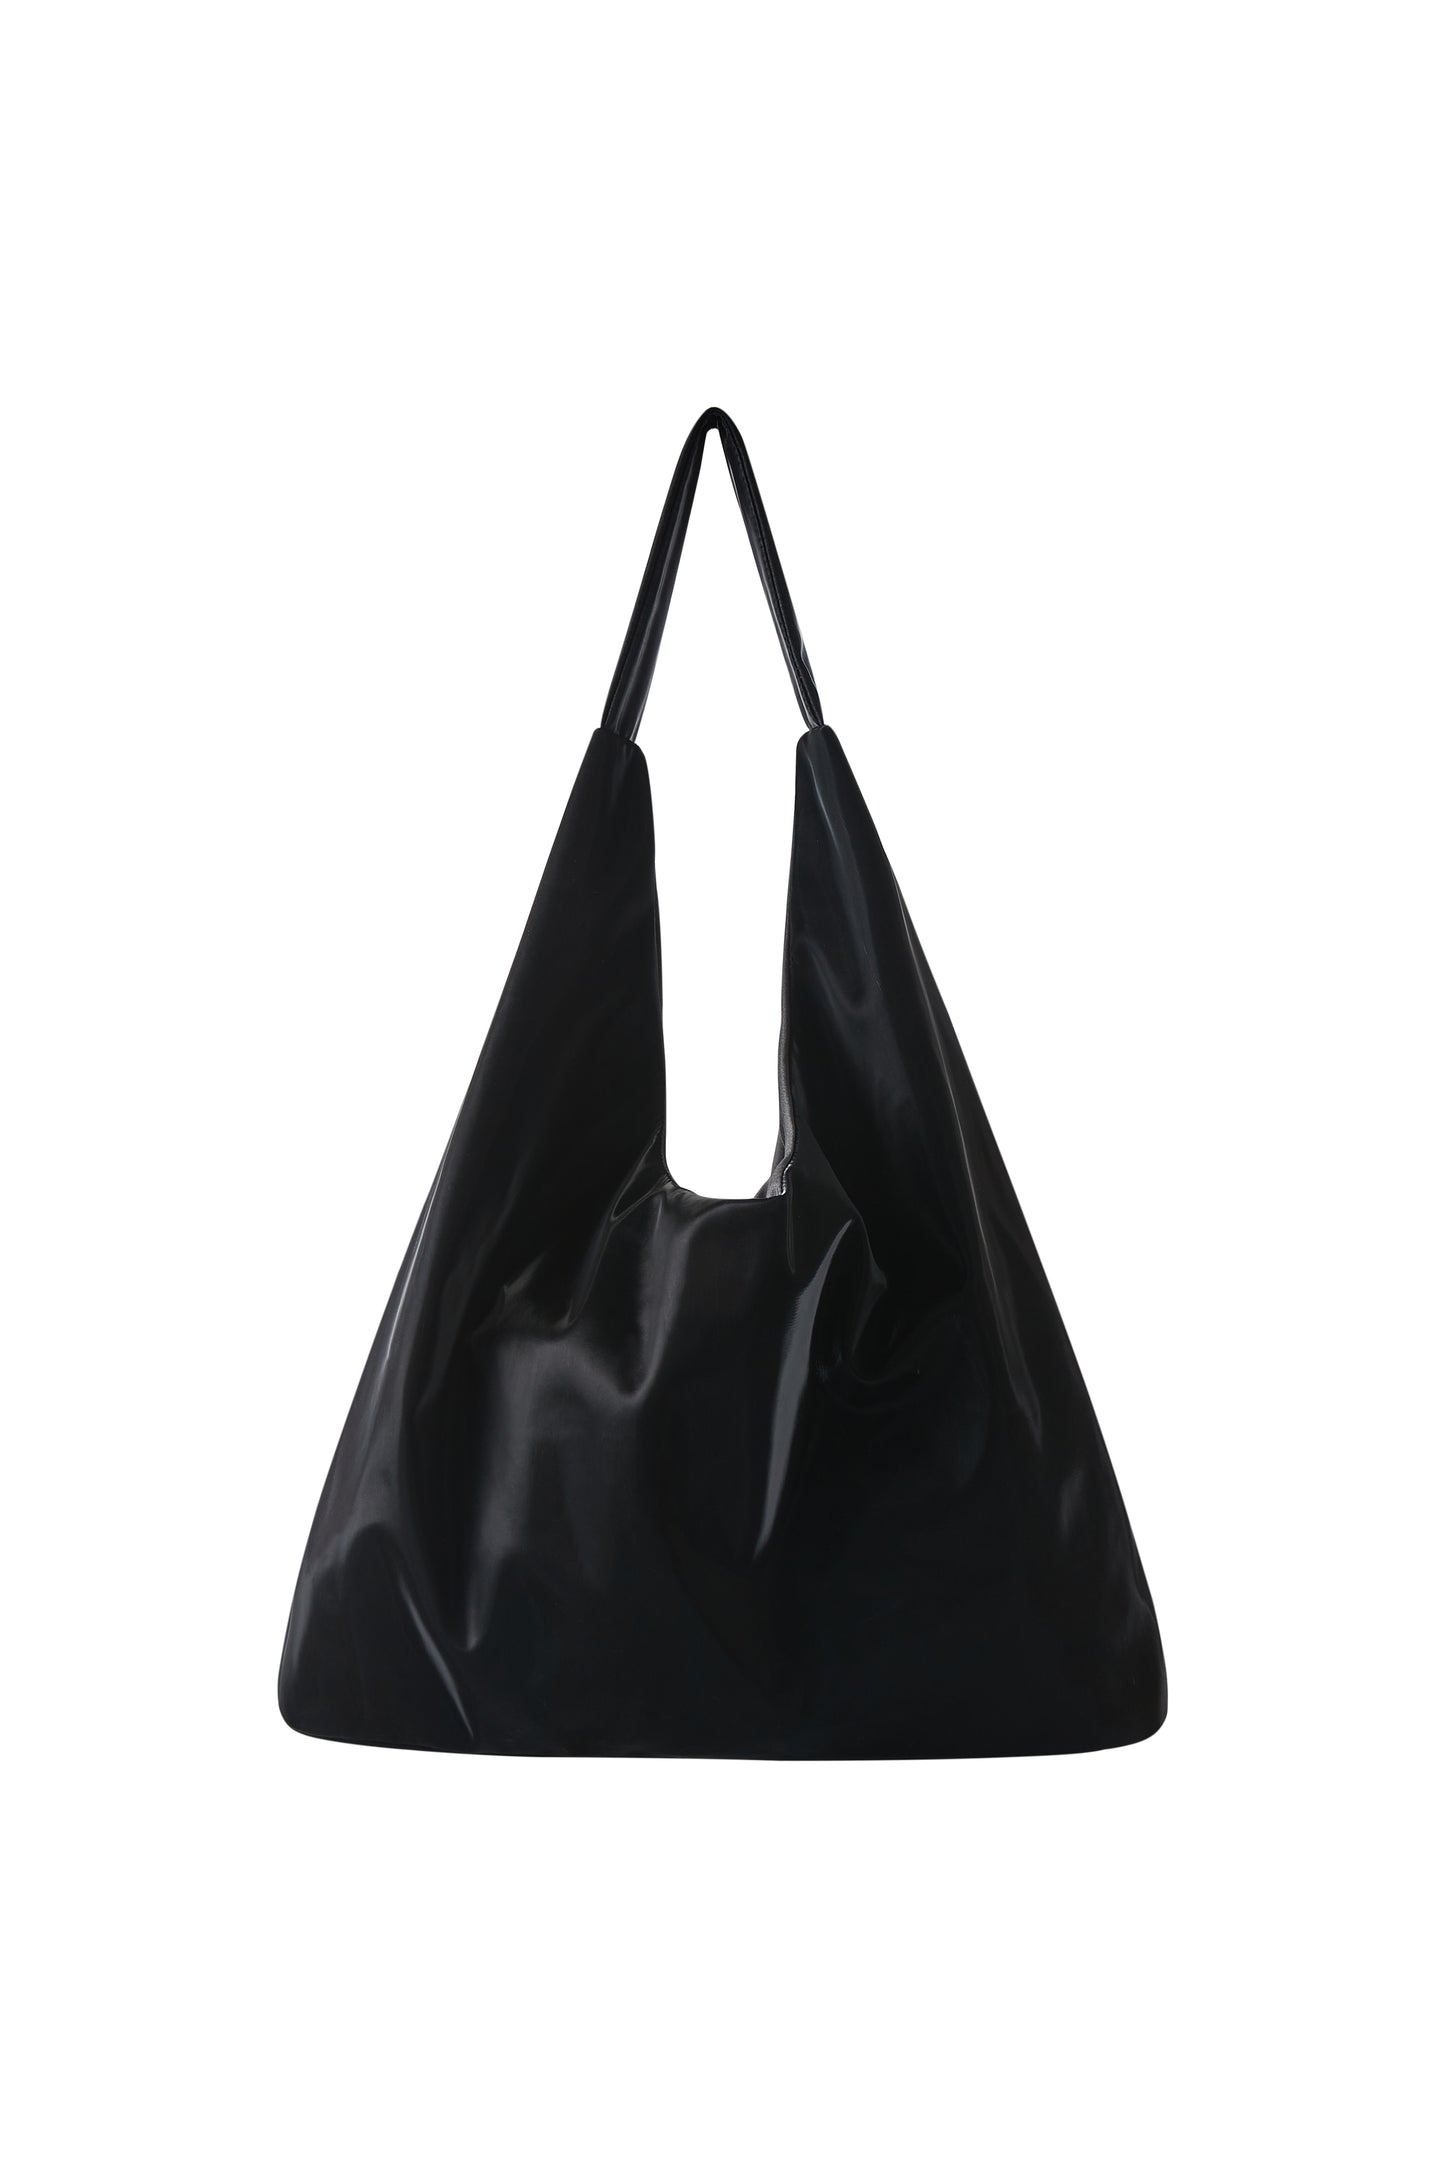 TENERA Eco-friendly Vegan Leather HOBO One-Shoulder Style/Black